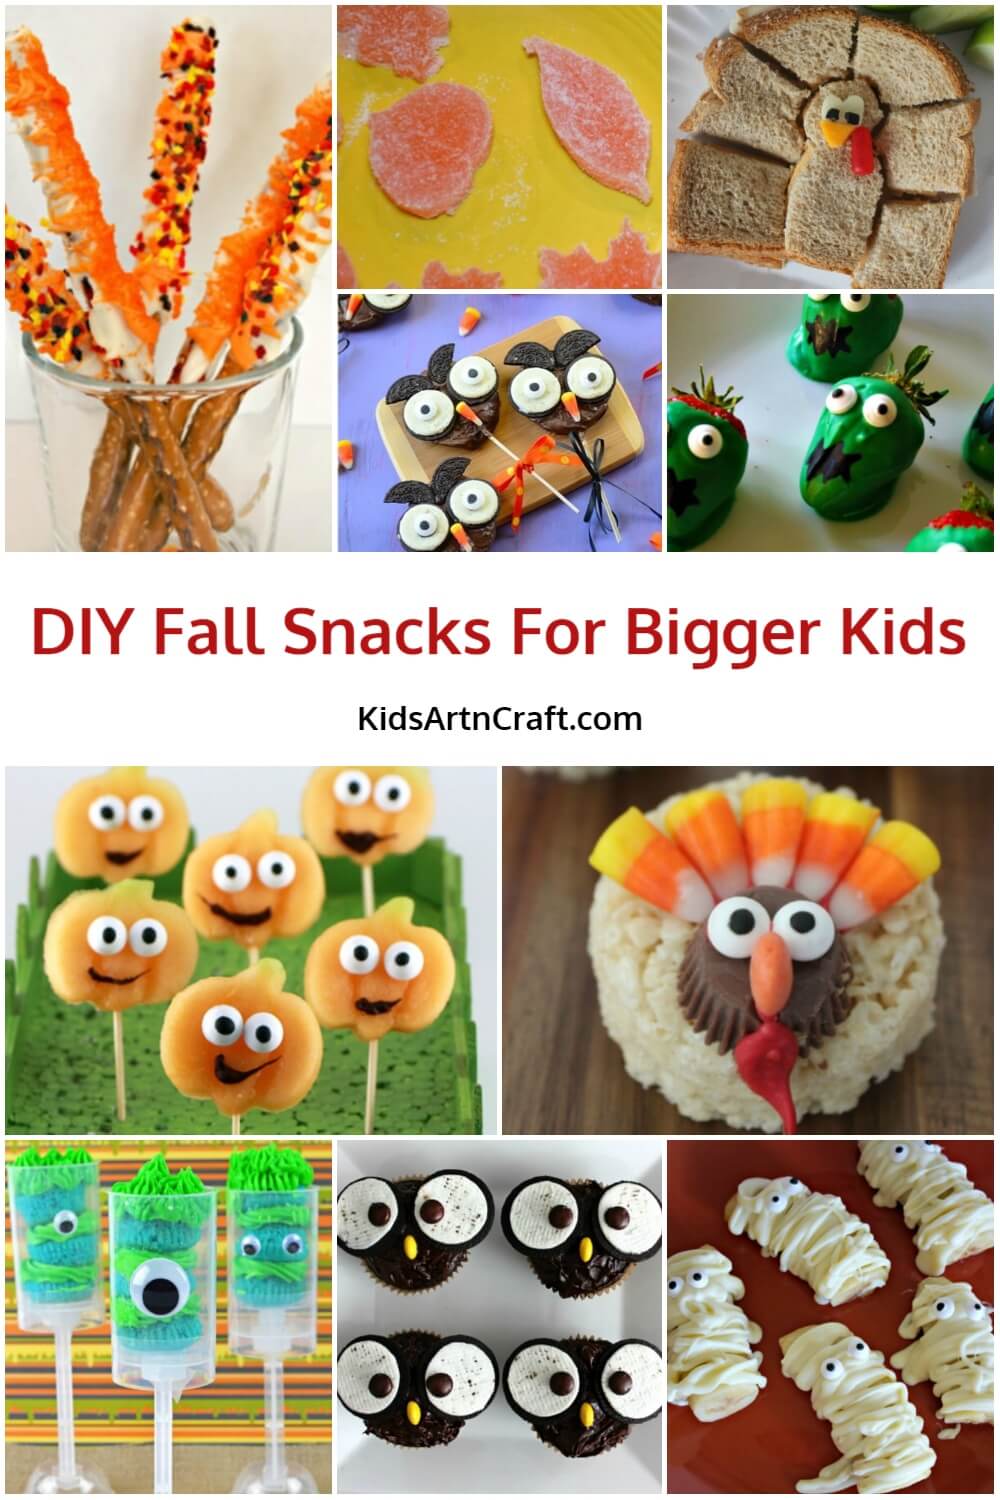 DIY Fall Snacks For Bigger Kids : Easy-Peasy Cute Fall Snack Crafting Ideas For Bigger Kids